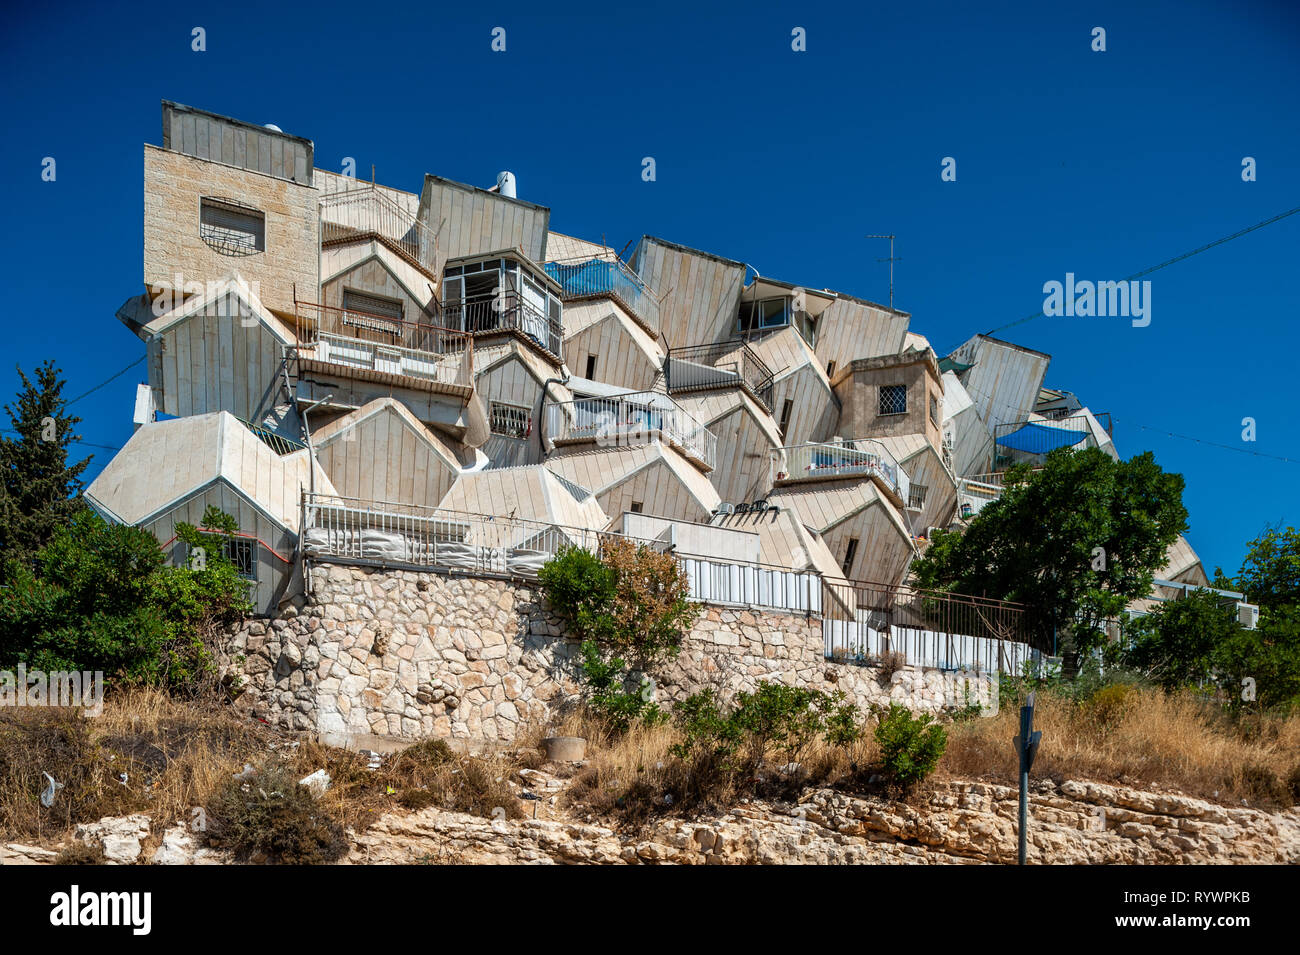 https://c8.alamy.com/comp/RYWPKB/jeruslaem-israel-9-june-2016-ramot-polin-apartment-block-designed-by-zvi-hecker-RYWPKB.jpg